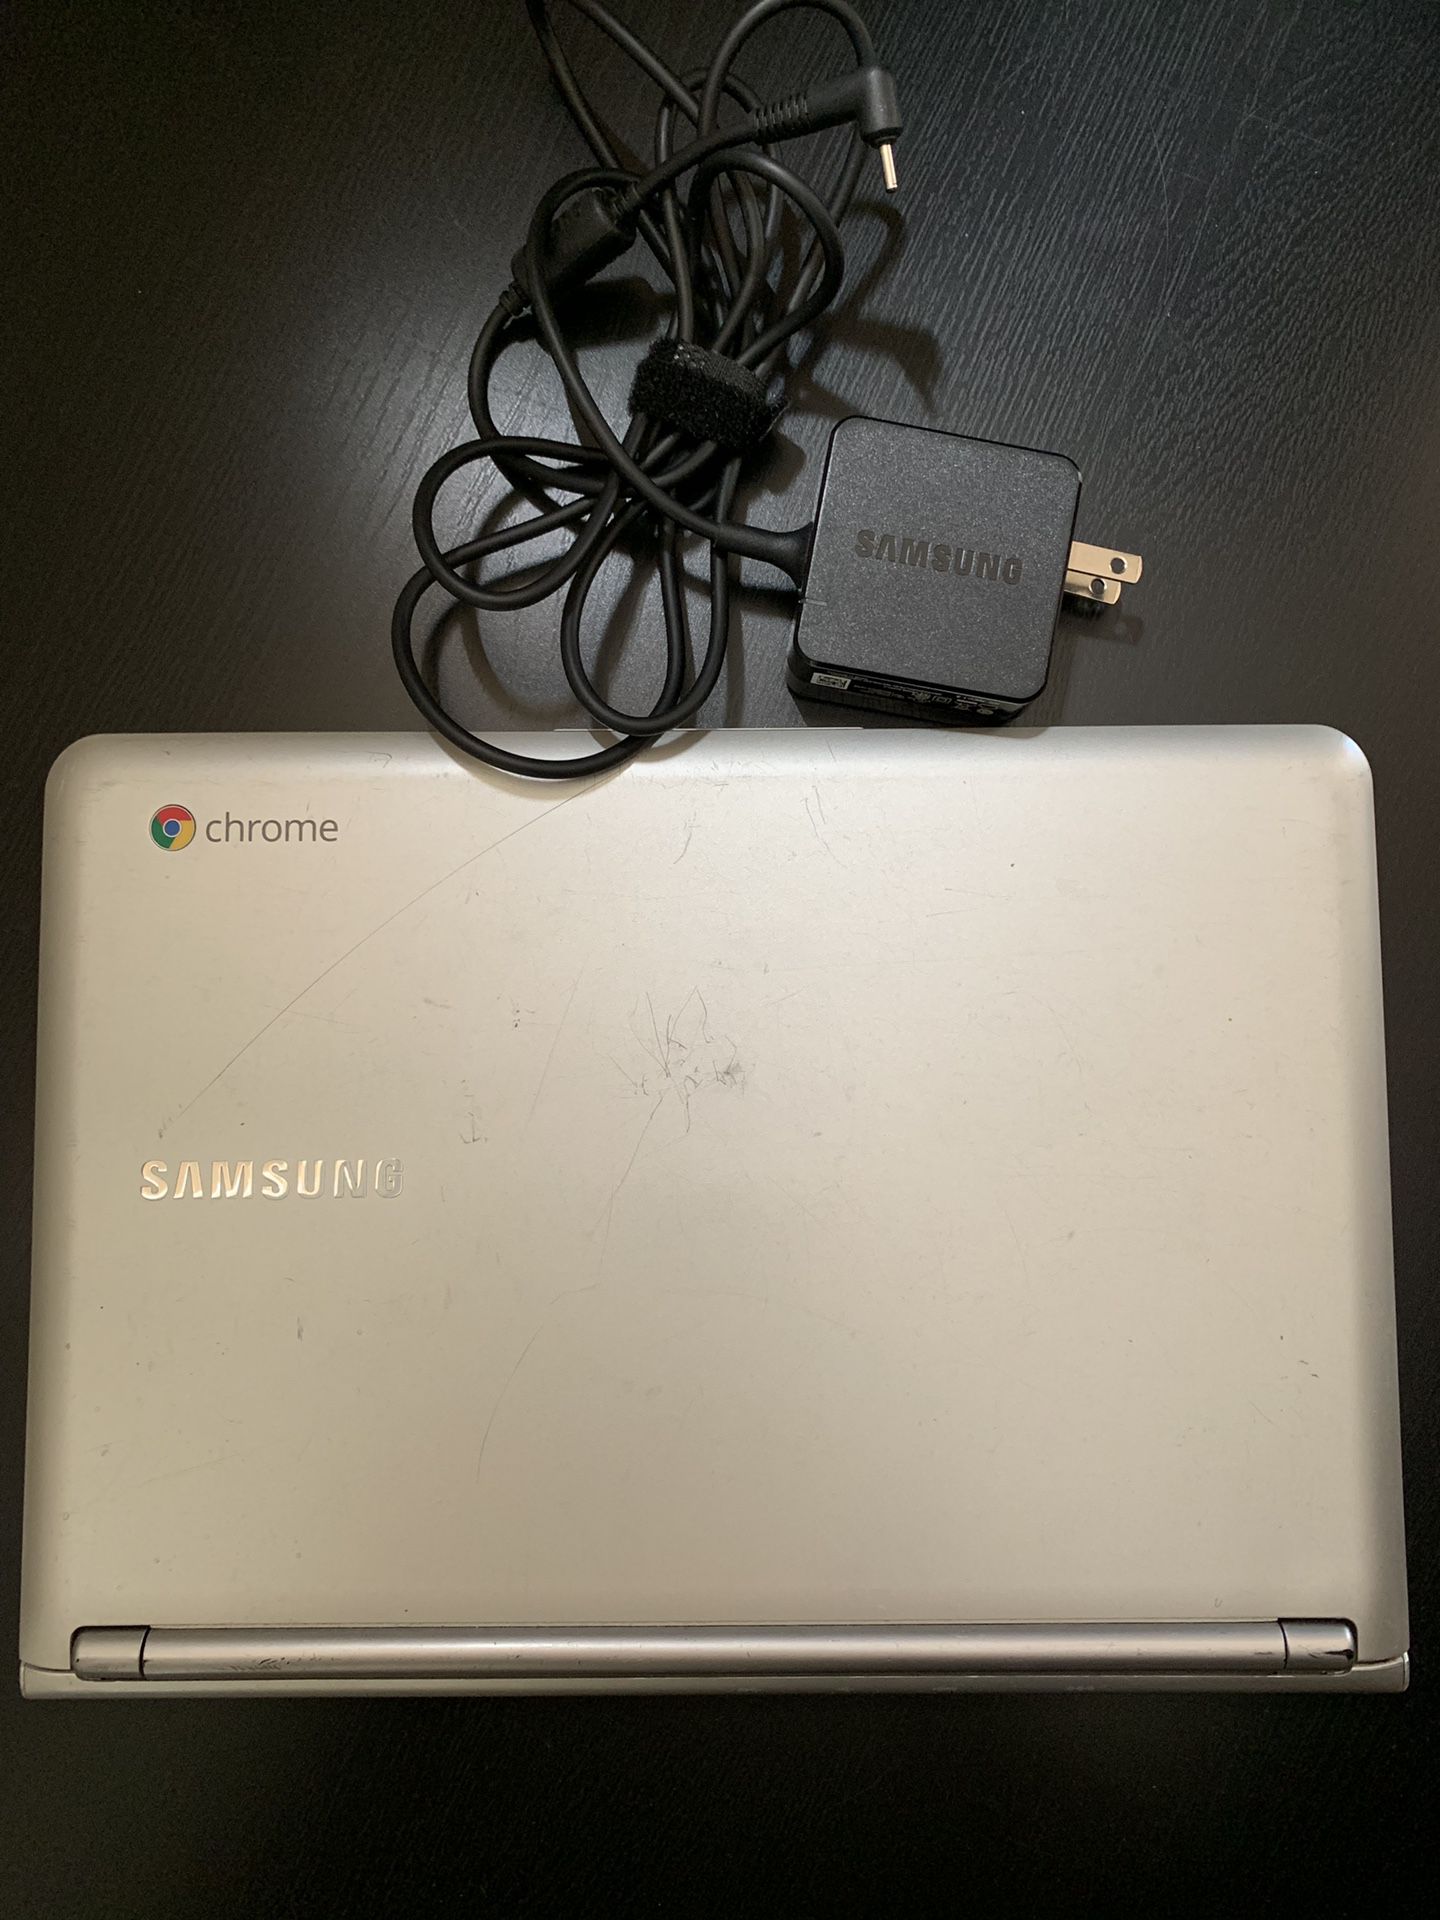 Samsung Chromebook - XE303C12